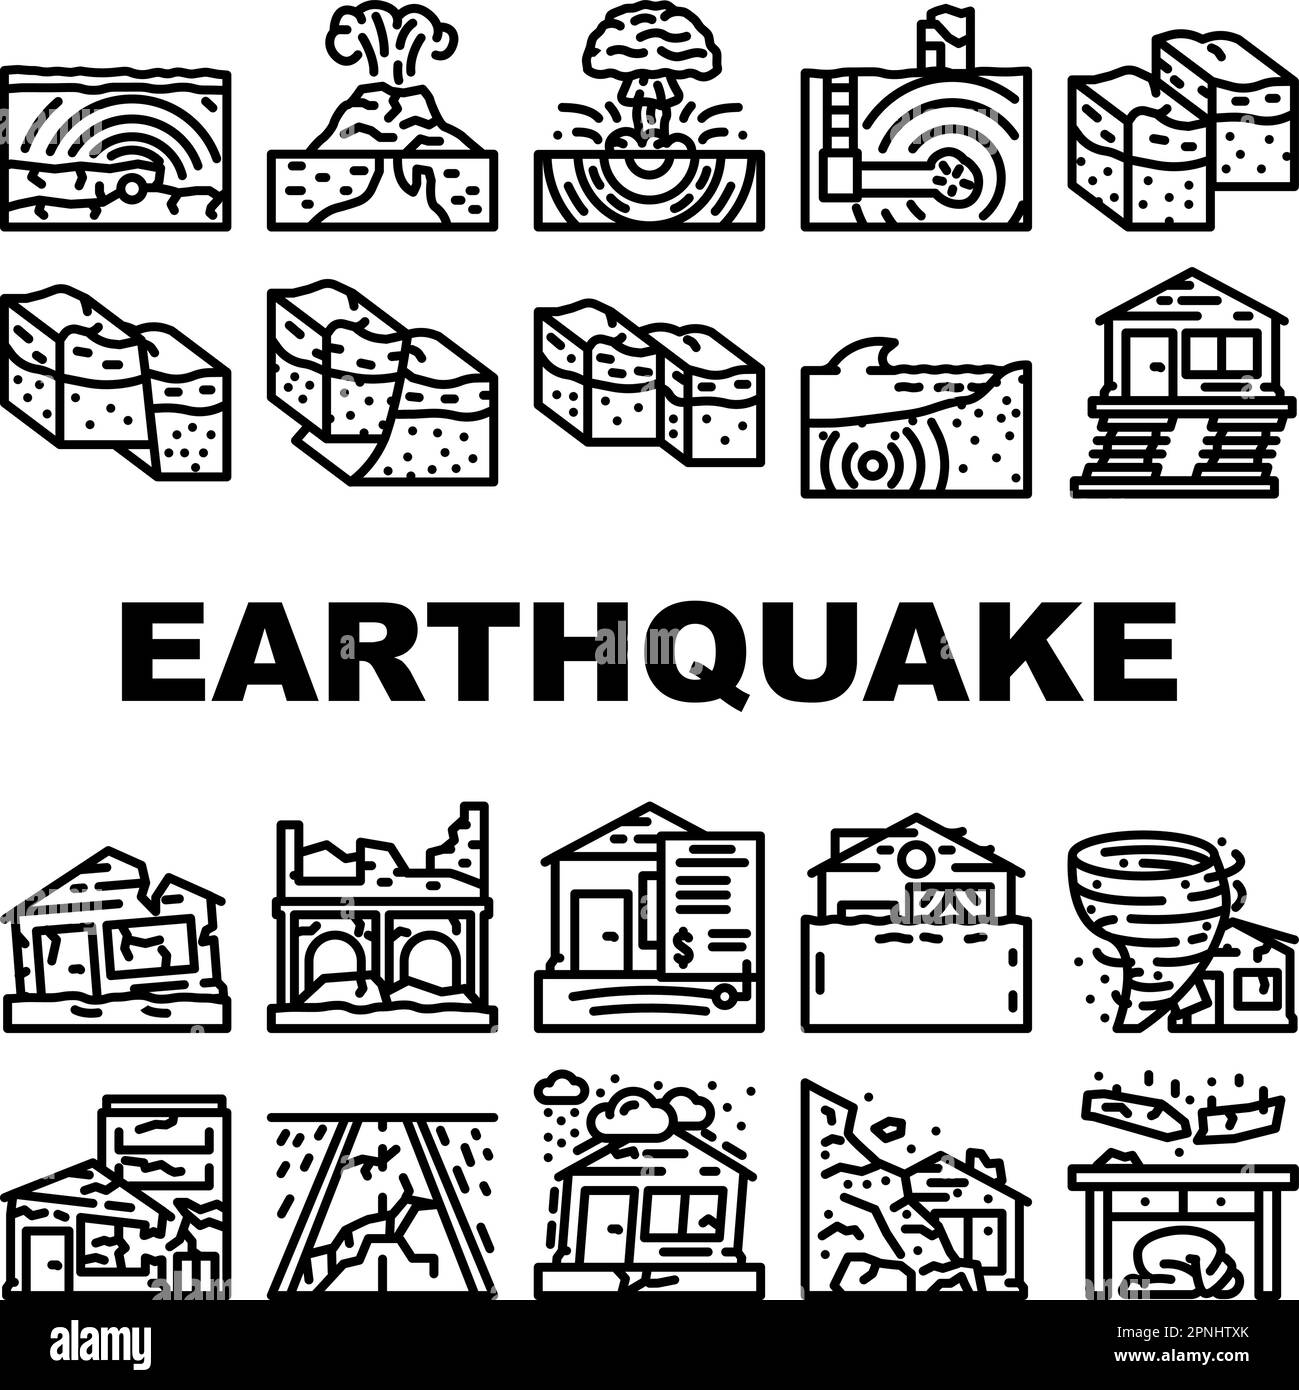 earthquake damage destruction icons set vector Stock Vector